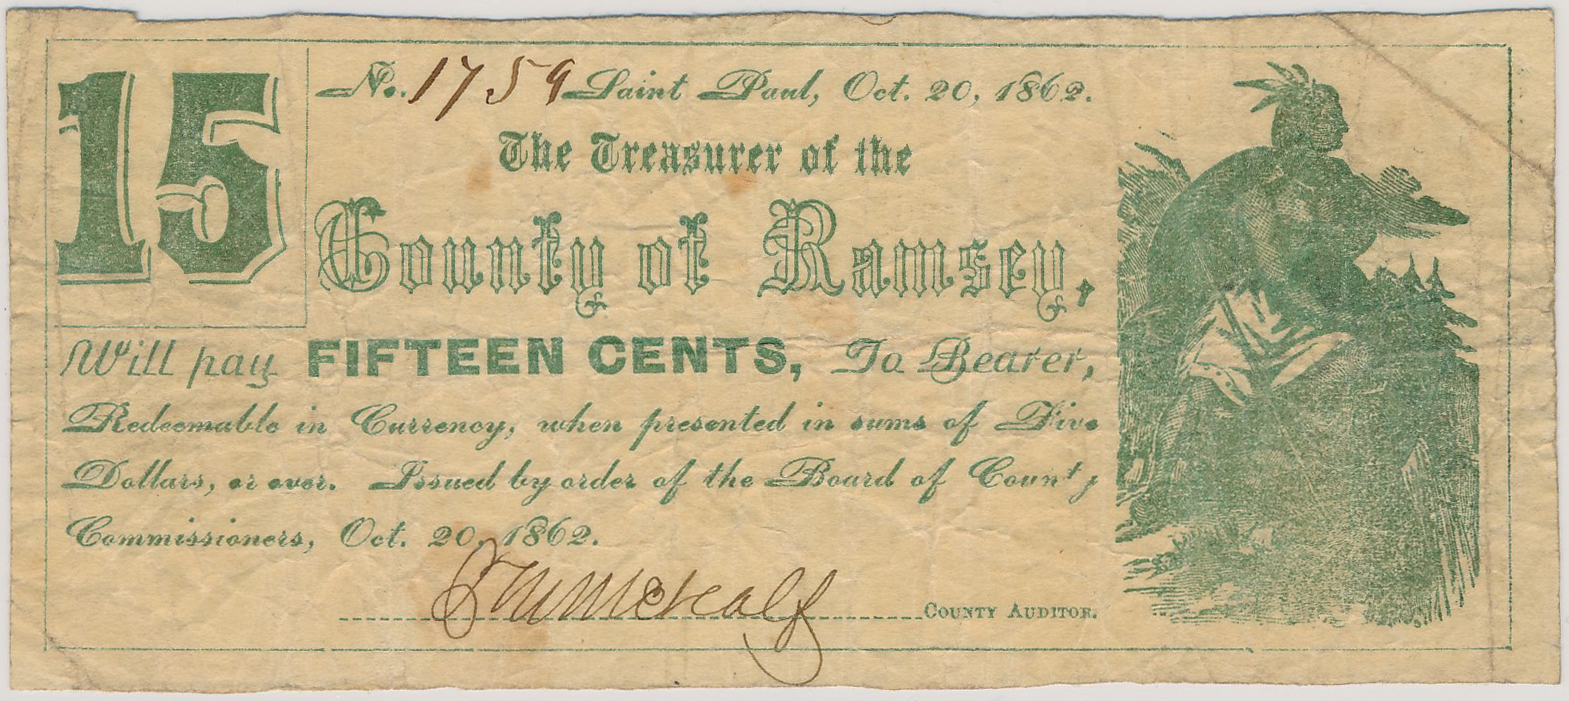 $.15 Treasurer of Ramsey County